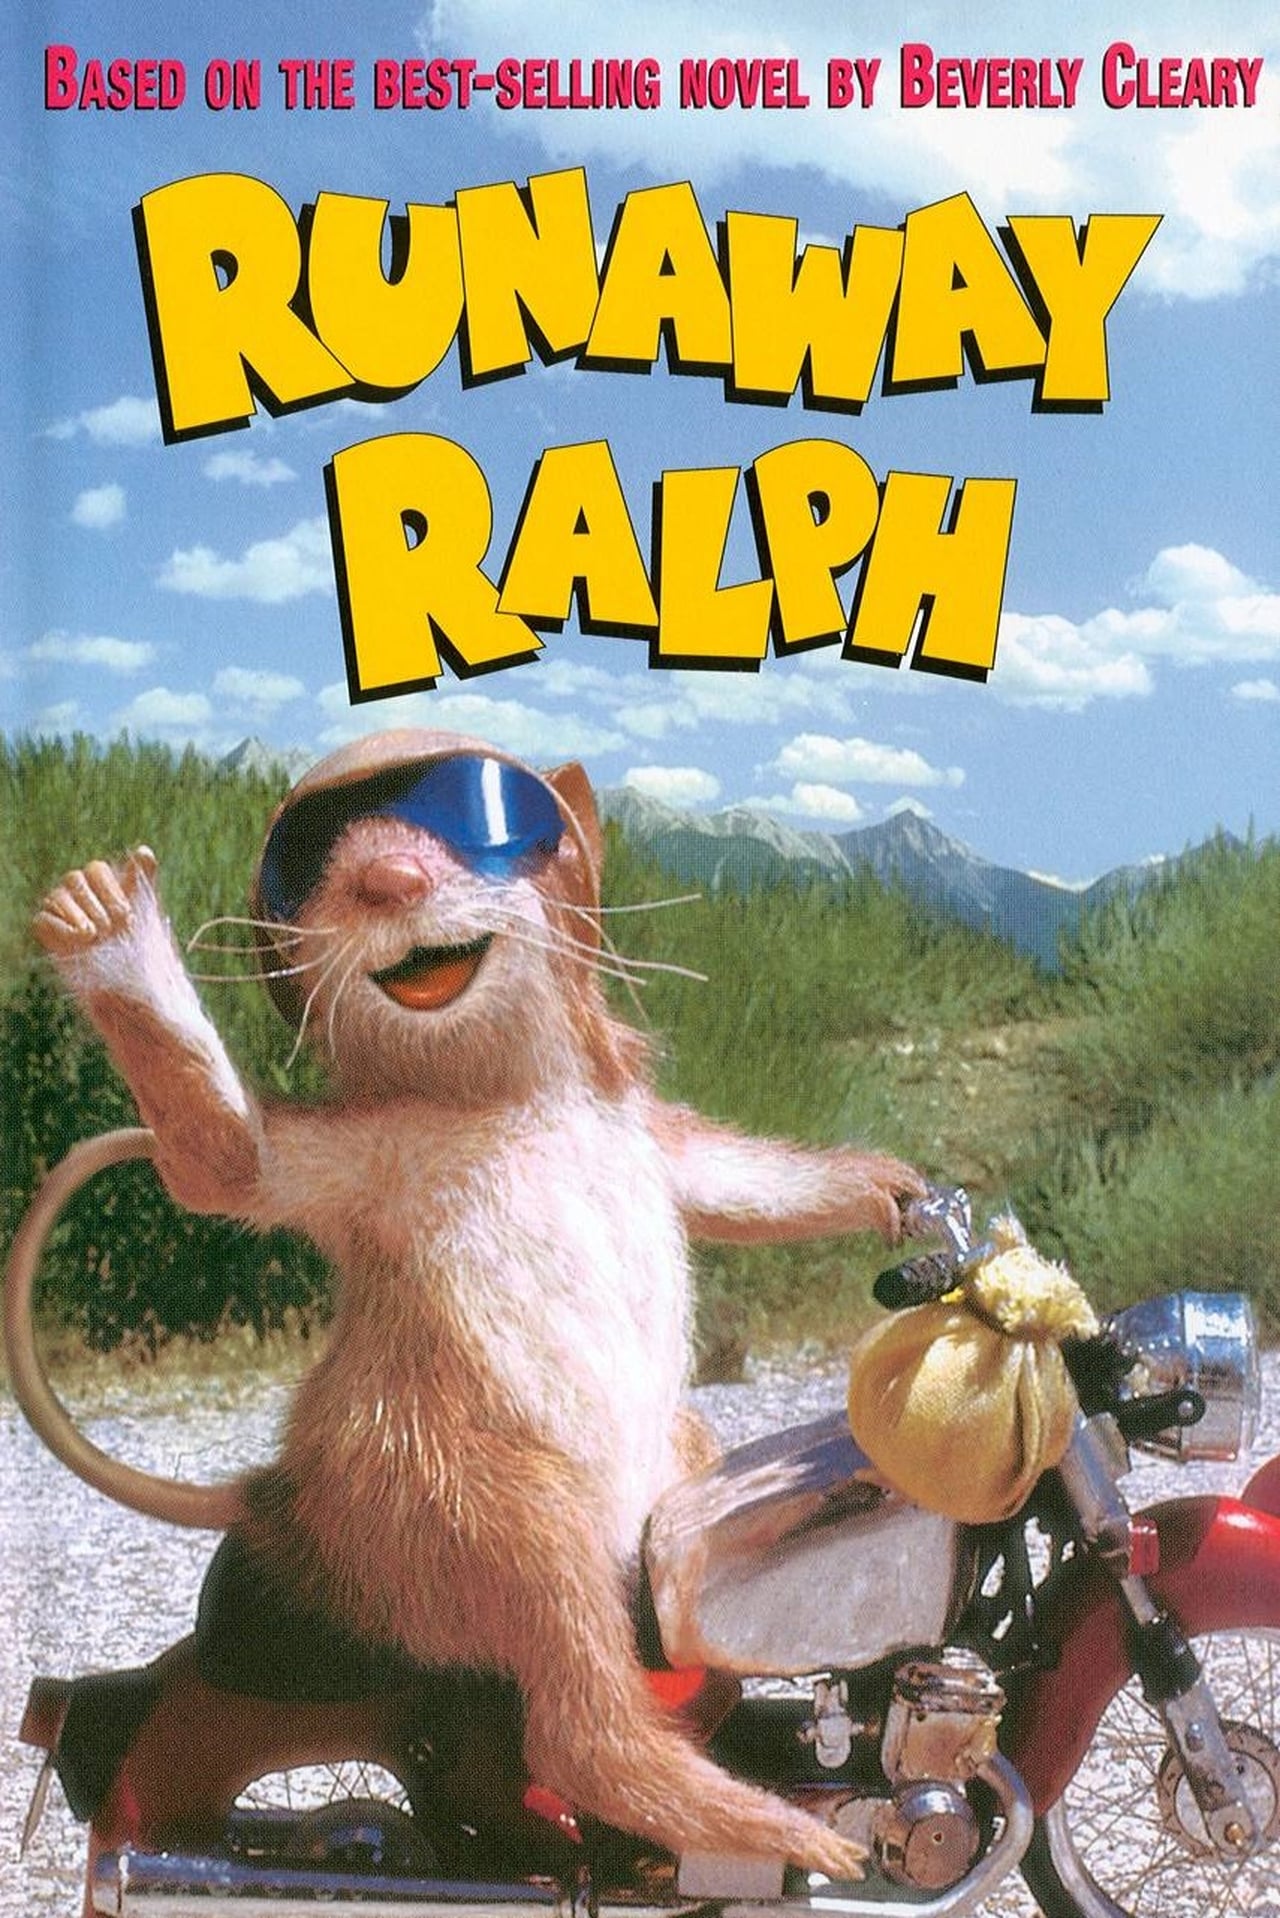 Runaway Ralph